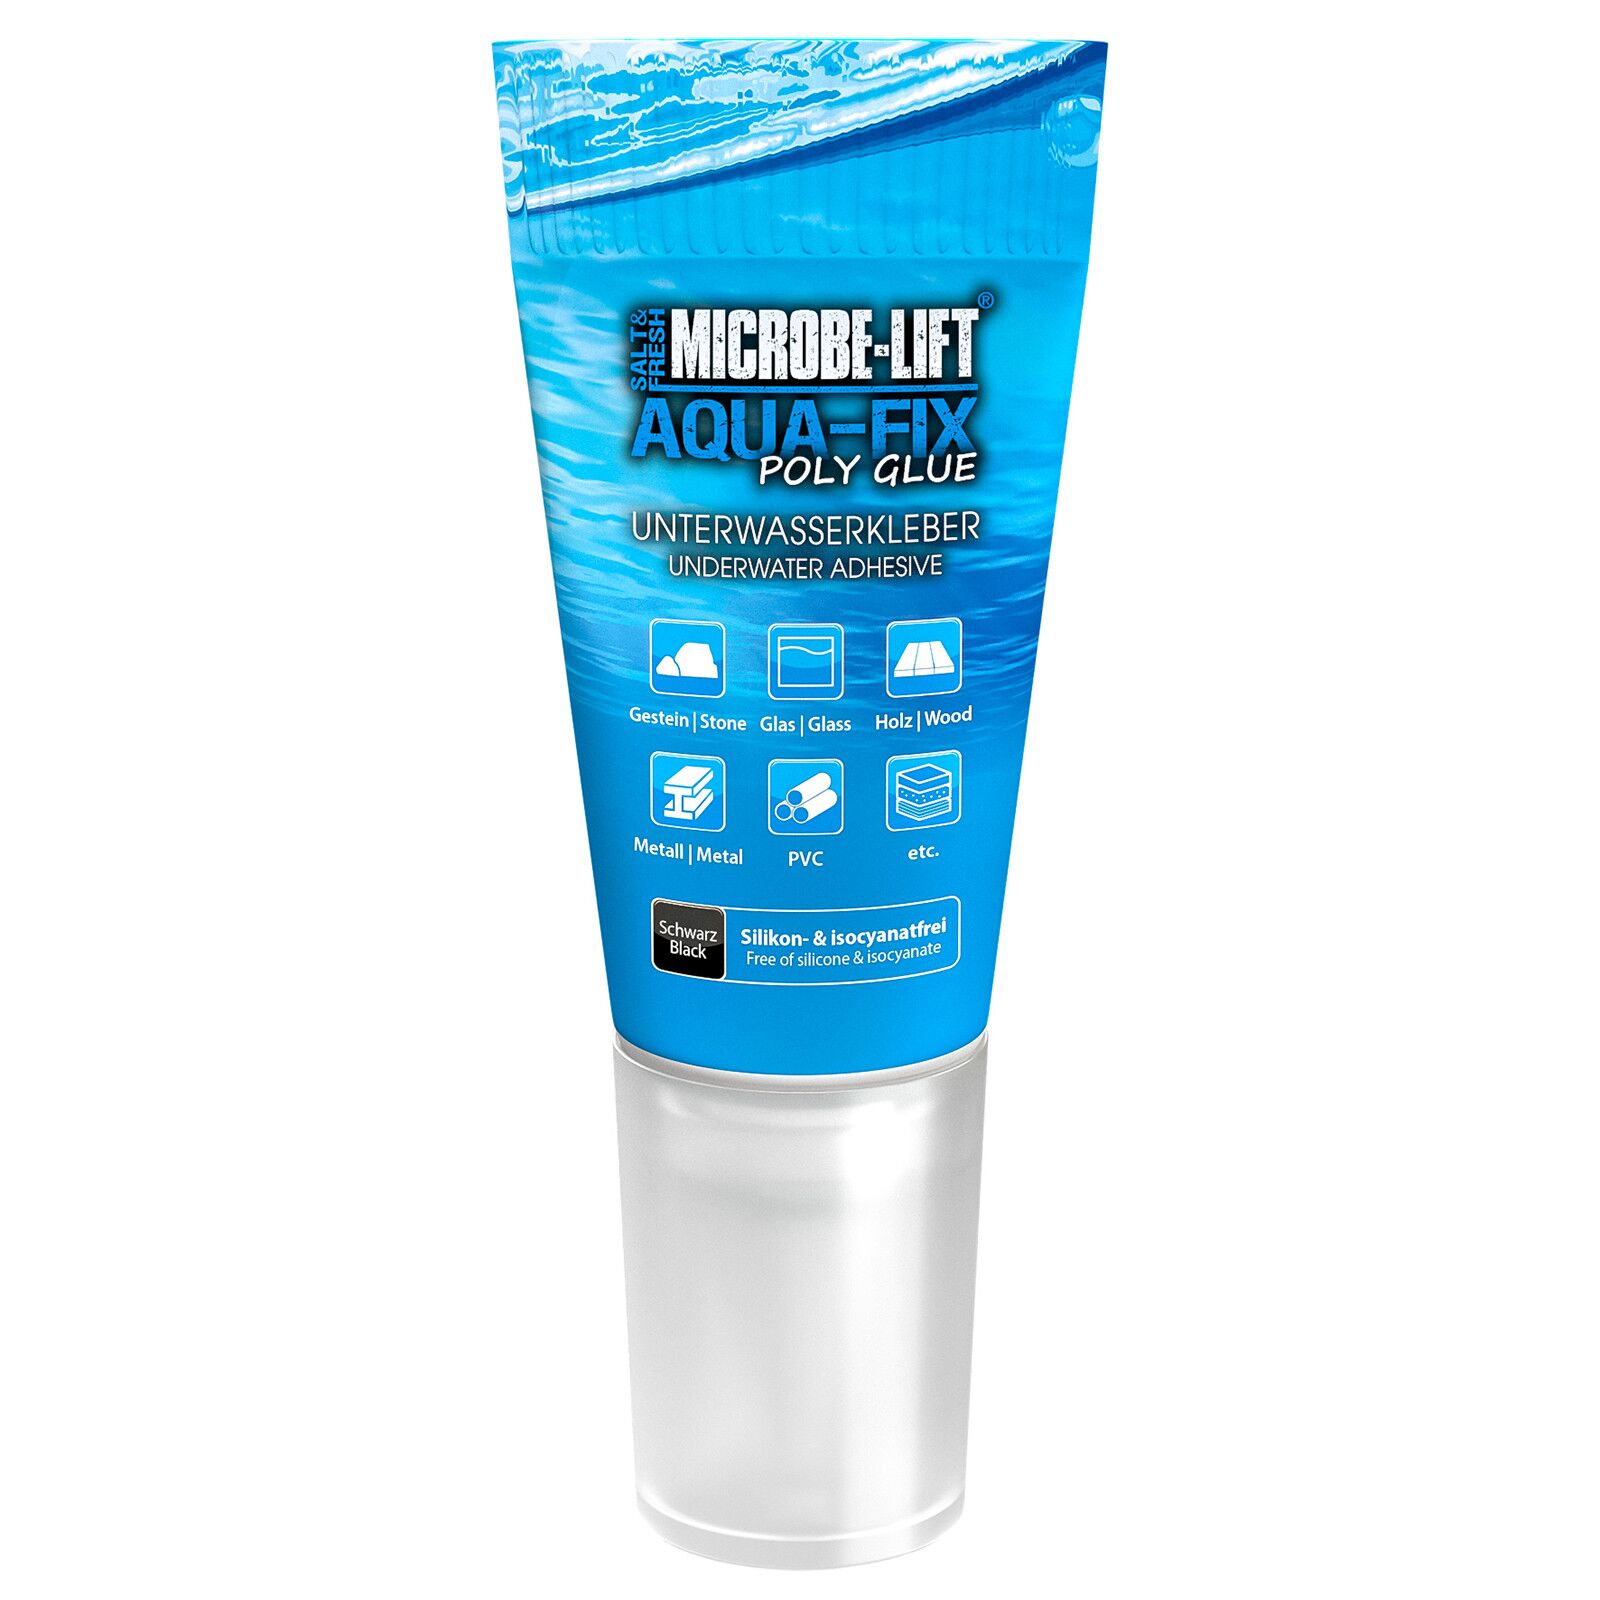 Microbe-Lift Aqua-Fix Poly Glue Underwater Adhesive